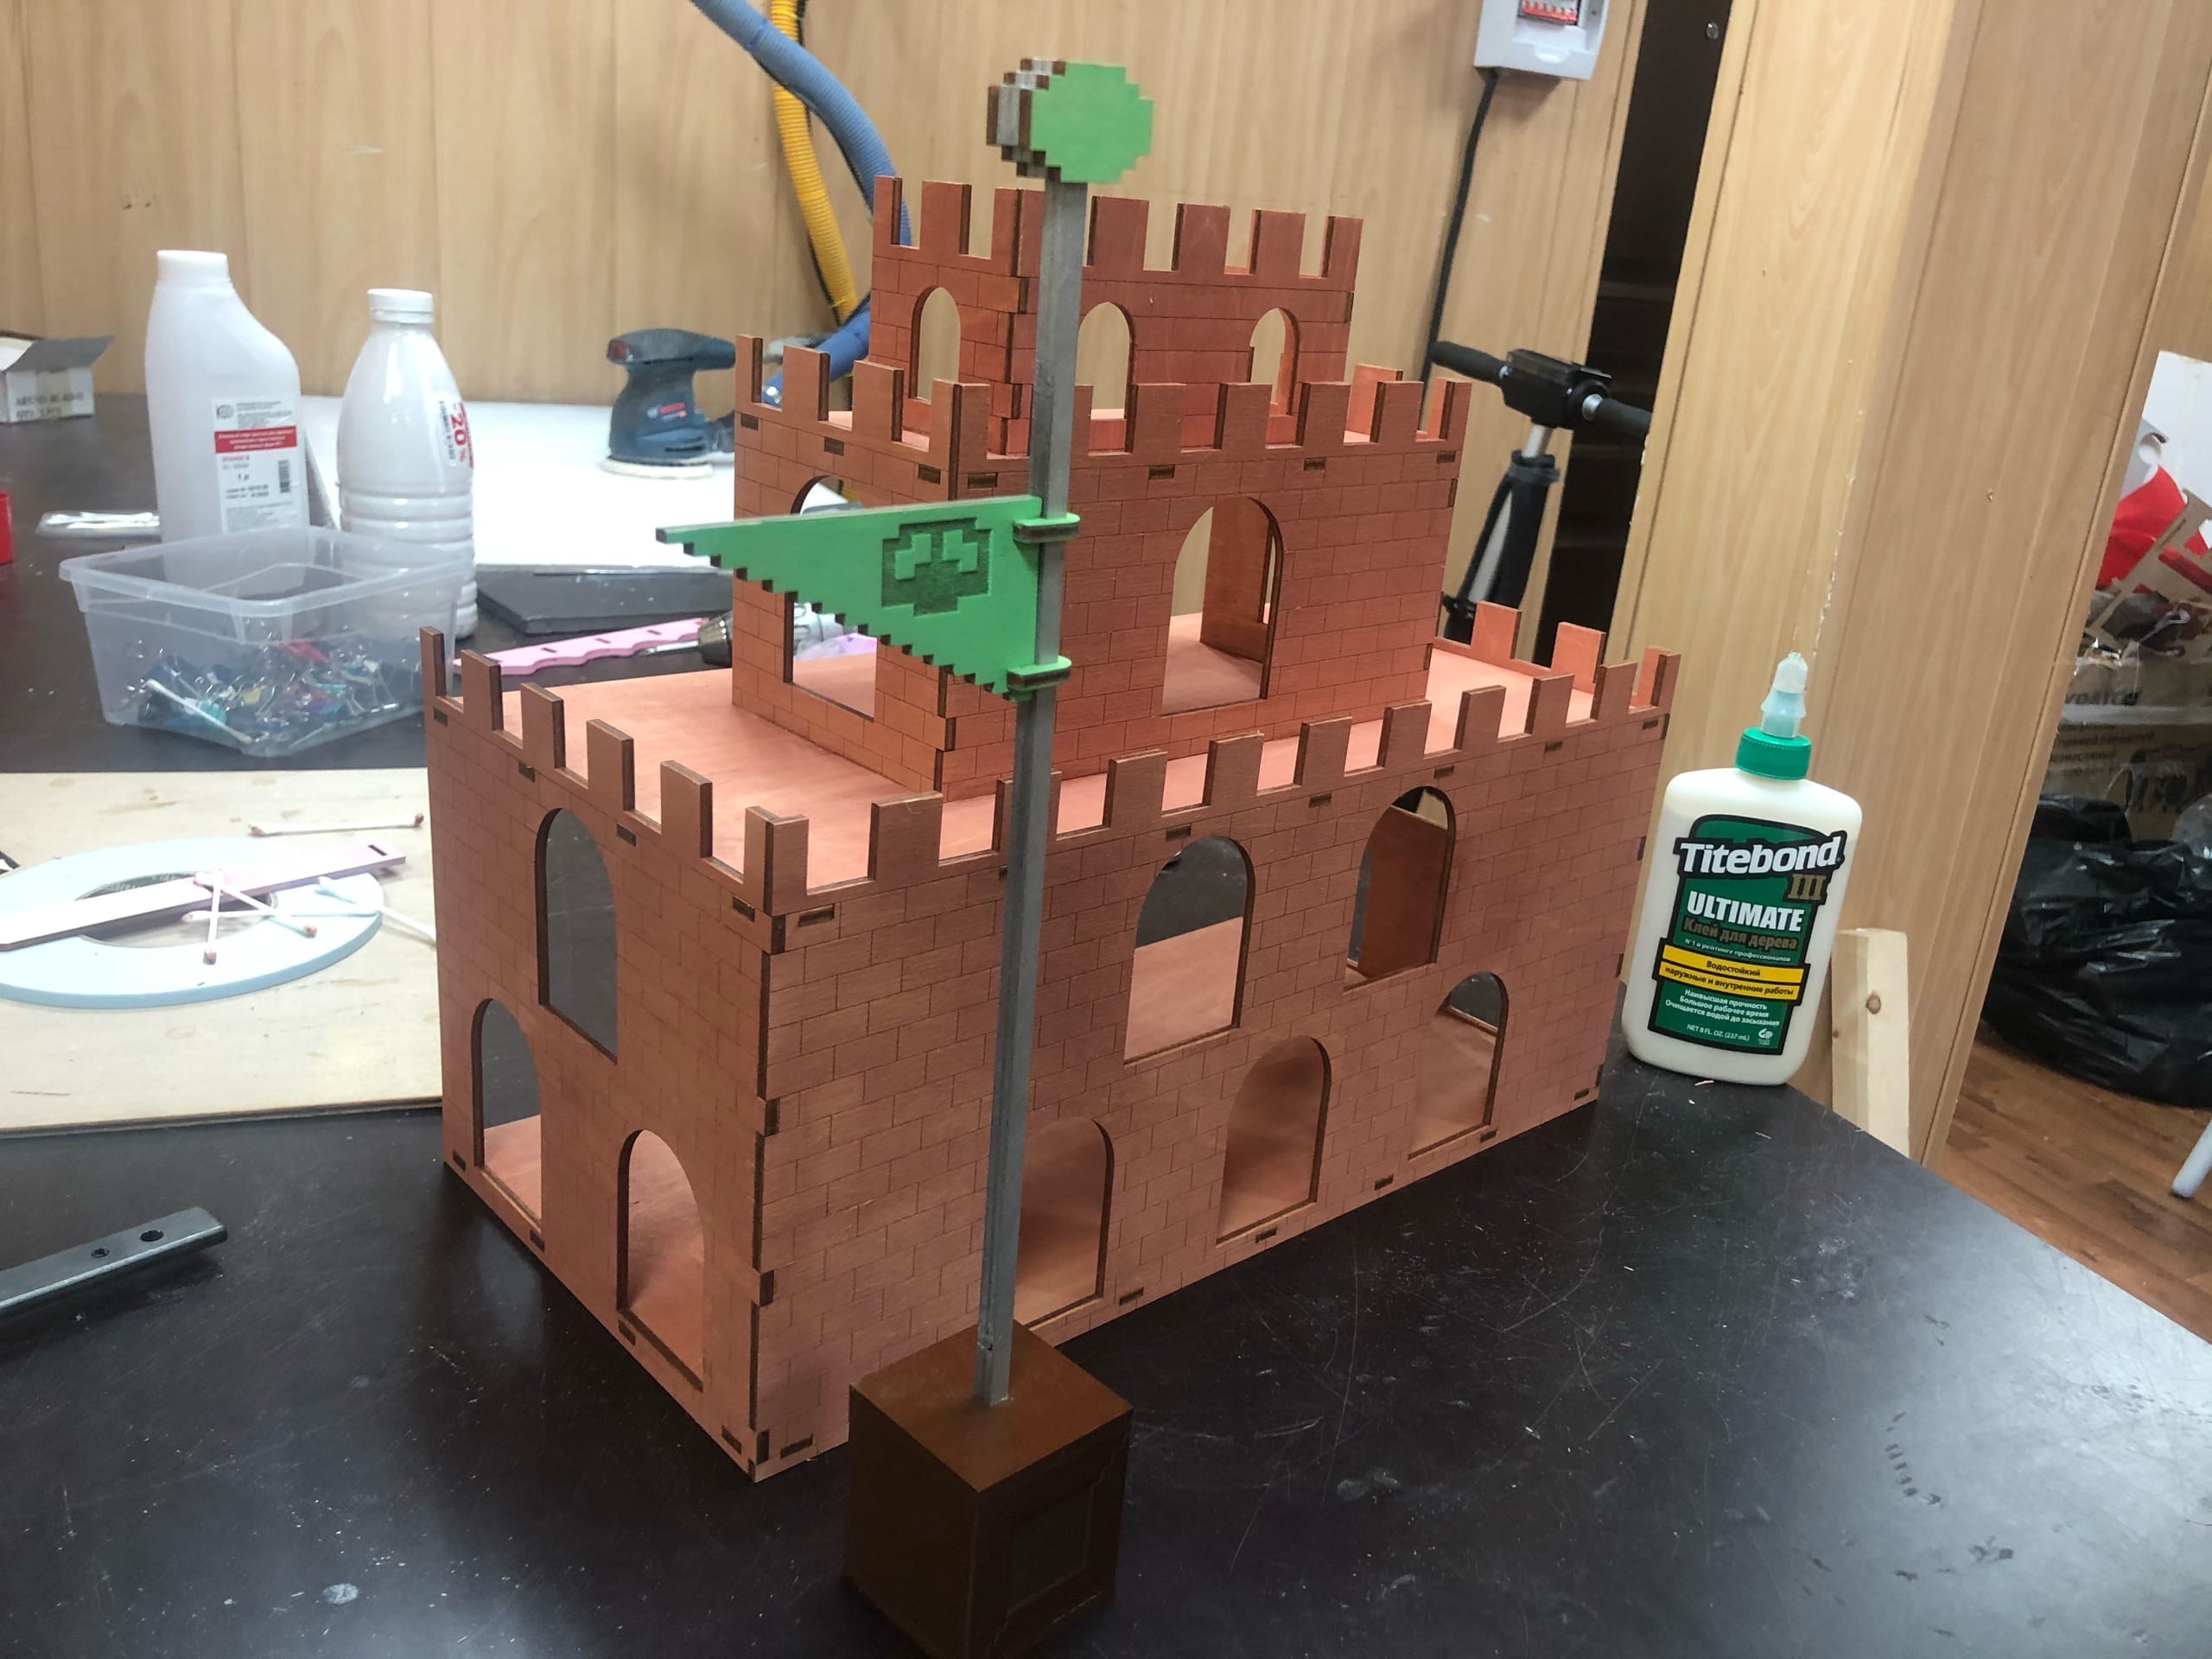 Castillo de princesa de madera Super Mario cortado con láser